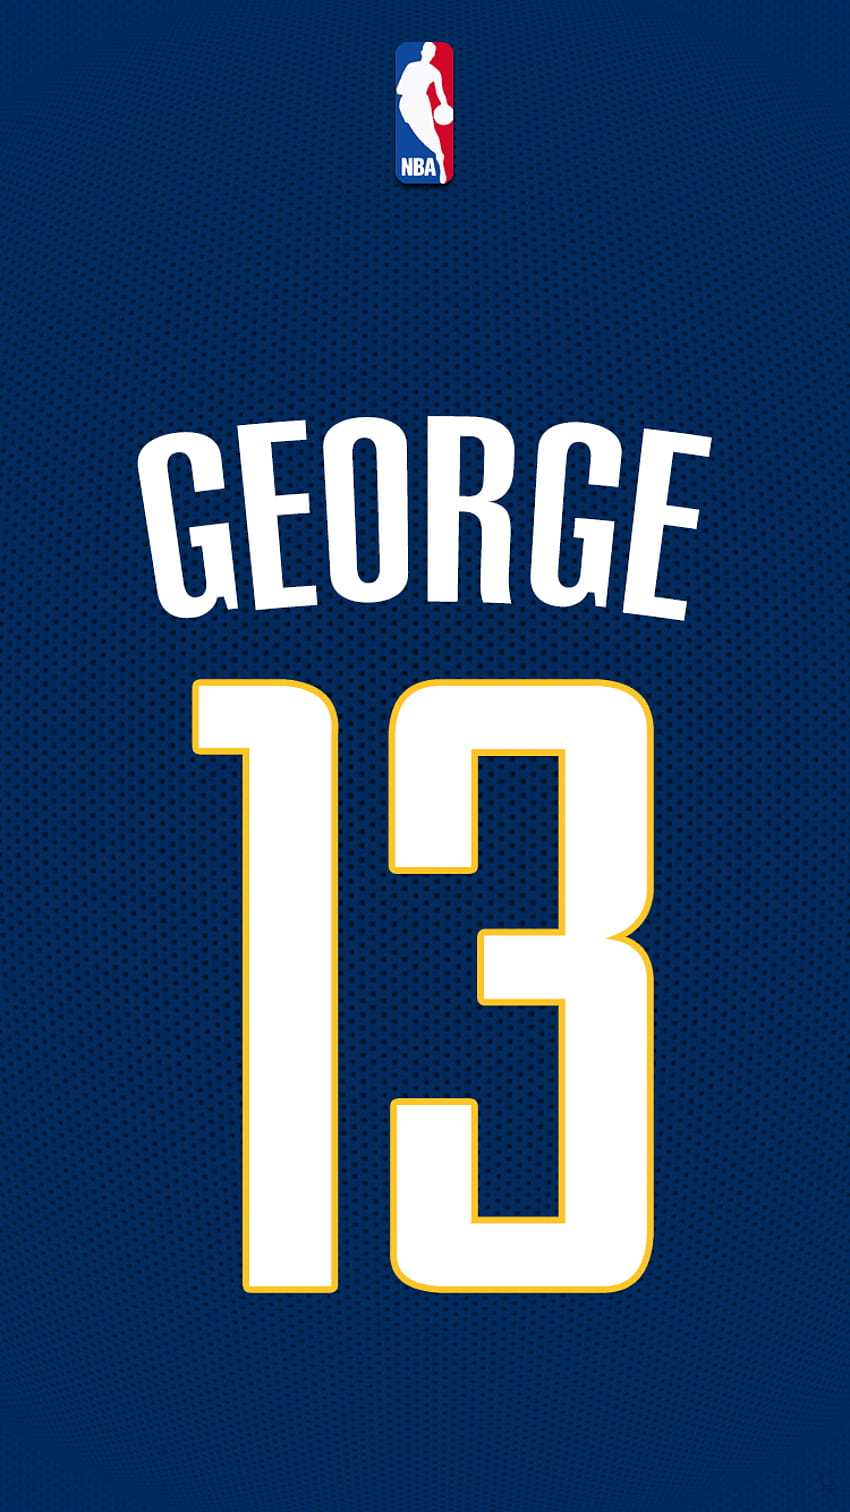 Paul George iPhone Clippers HD-Handy-Hintergrundbild